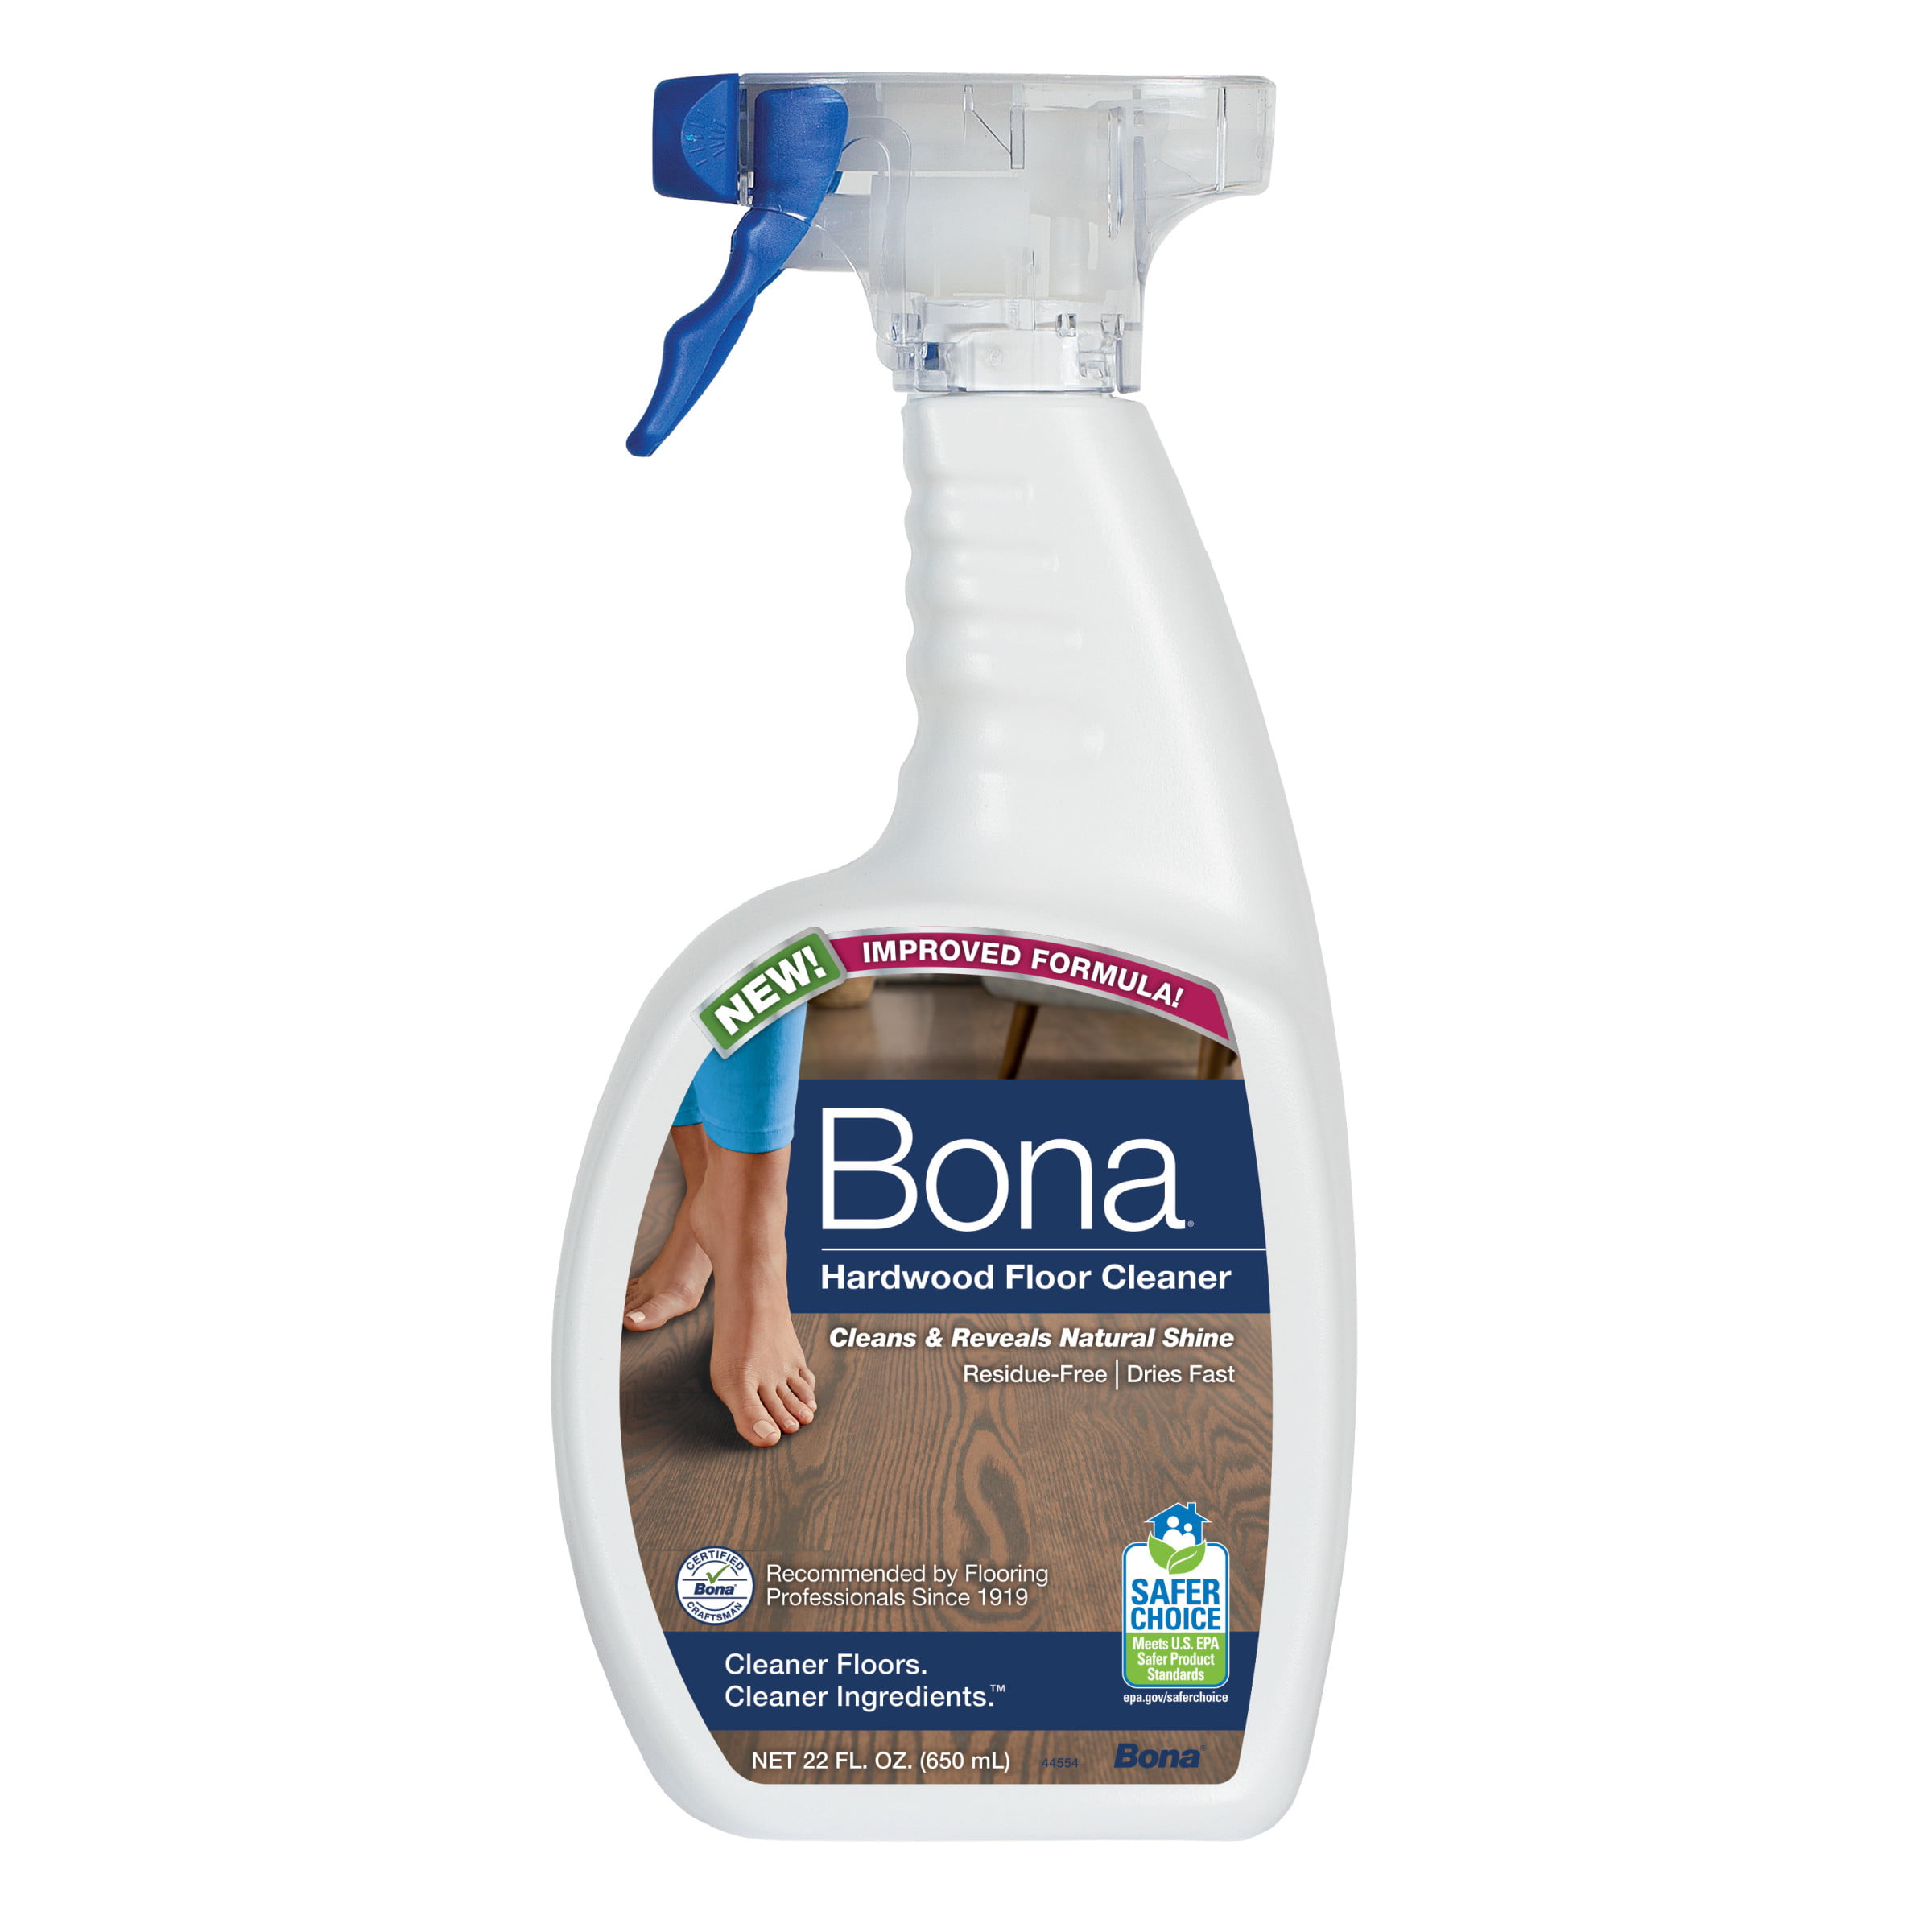 Bona Hardwood Floor Cleaner Spray 22 Fl, Bona Hardwood Floor Polish Reviews